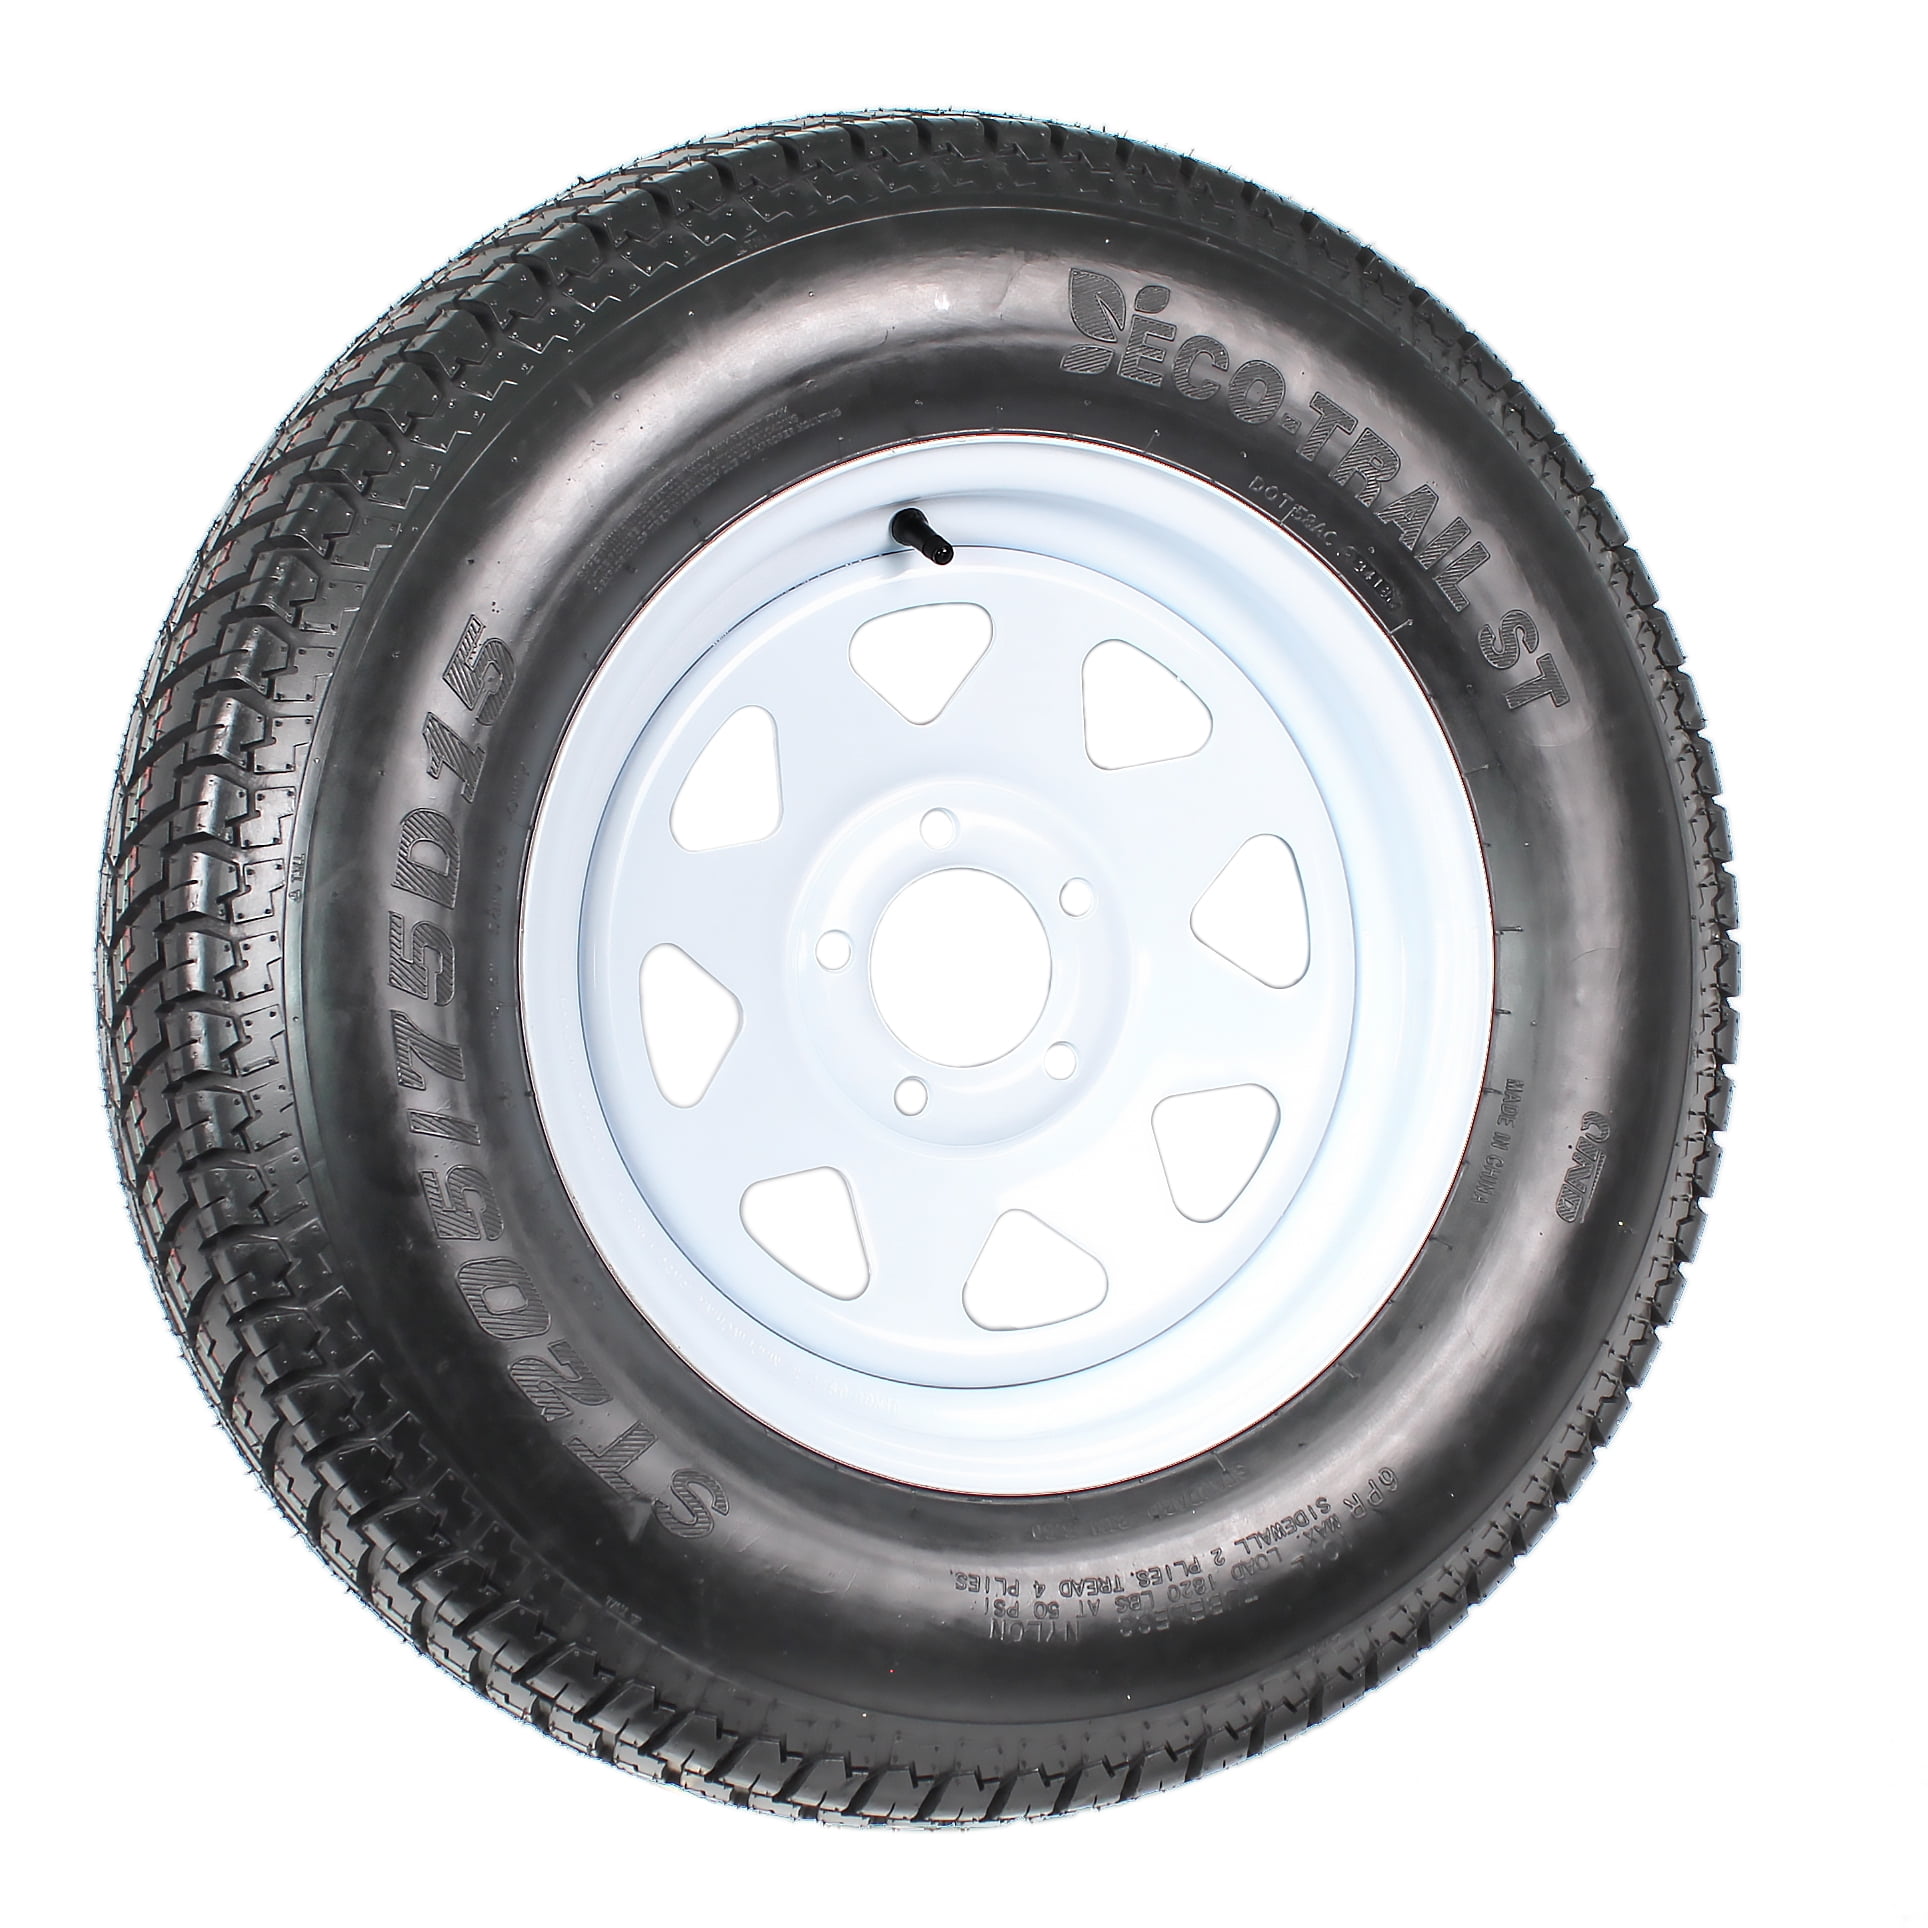 eCustomrim Eco Trailer Tire On Rim ST225/75D15 15 in Load D 6 Lug White Spoke